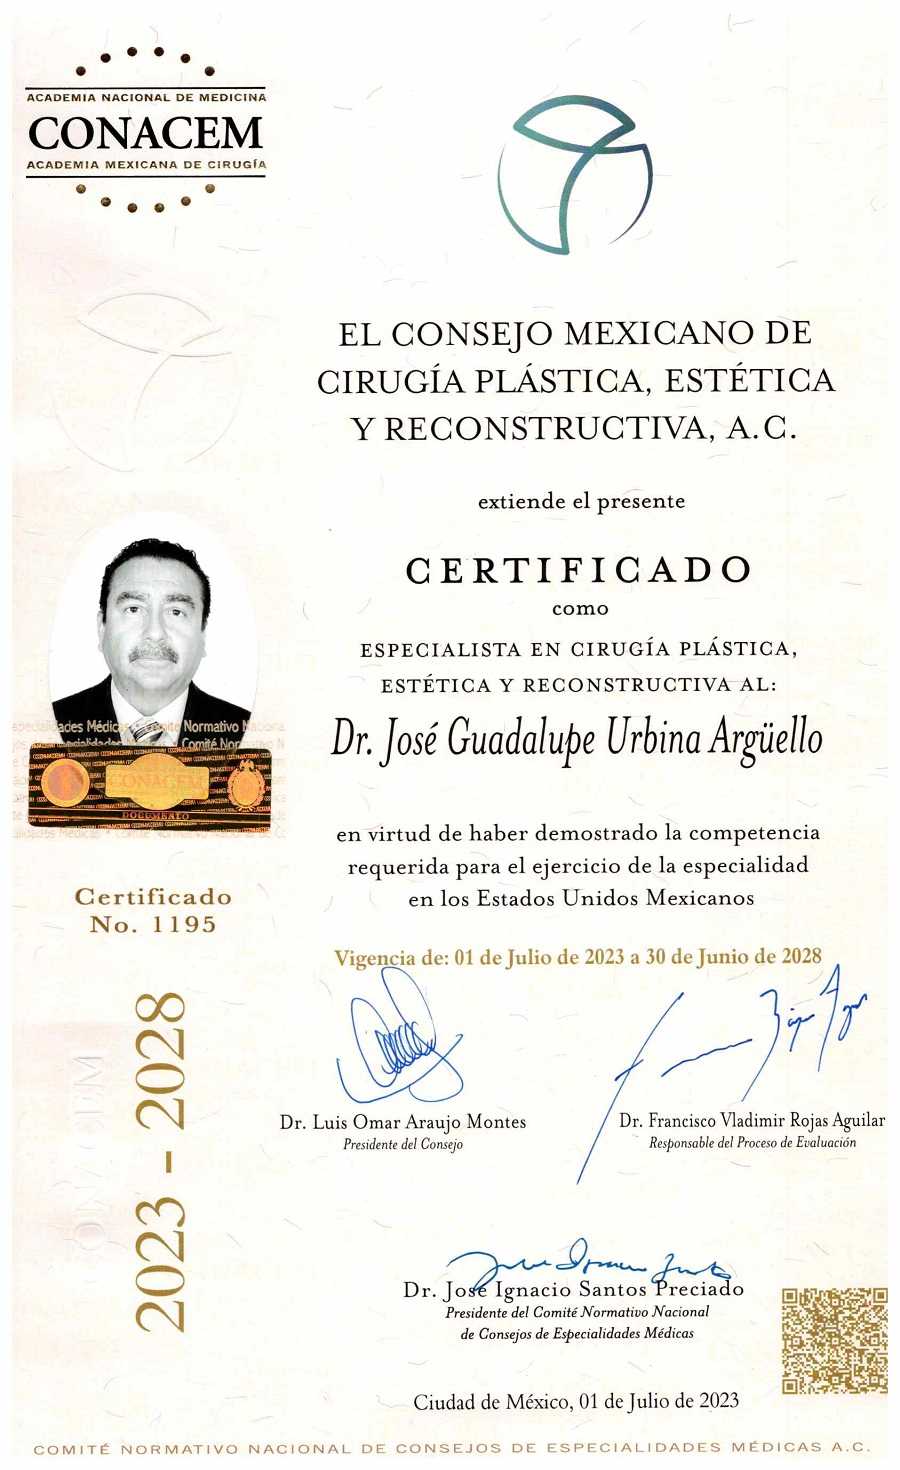 Award Received by Dr. Urbina Arguello